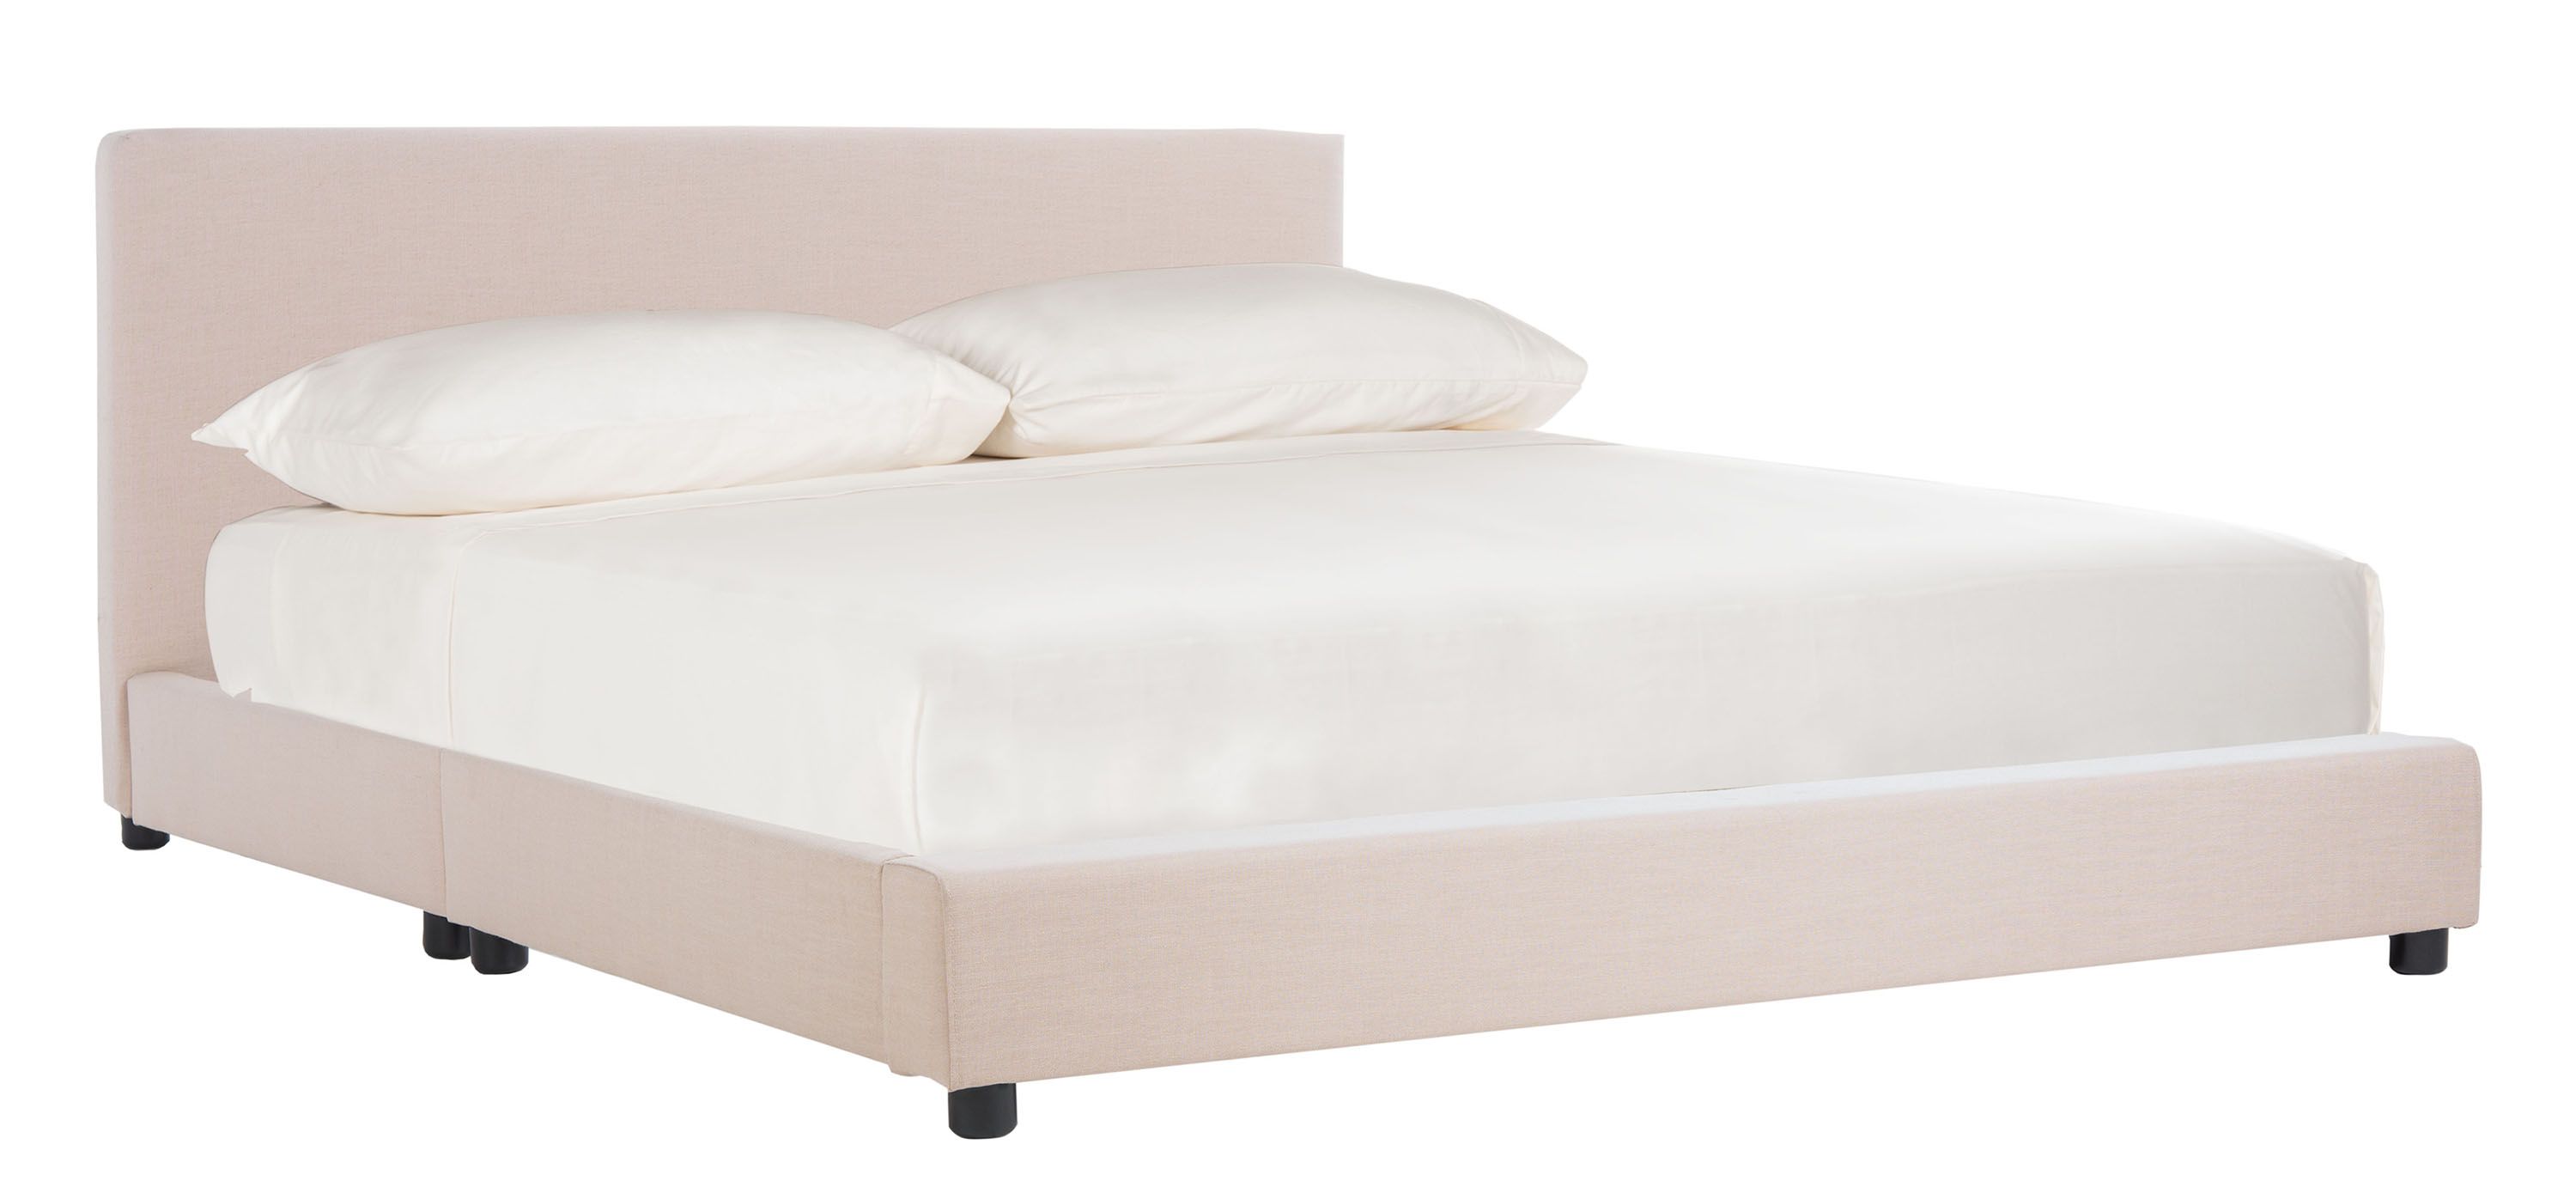 Carter Upholstered Upholstered Queen Bed